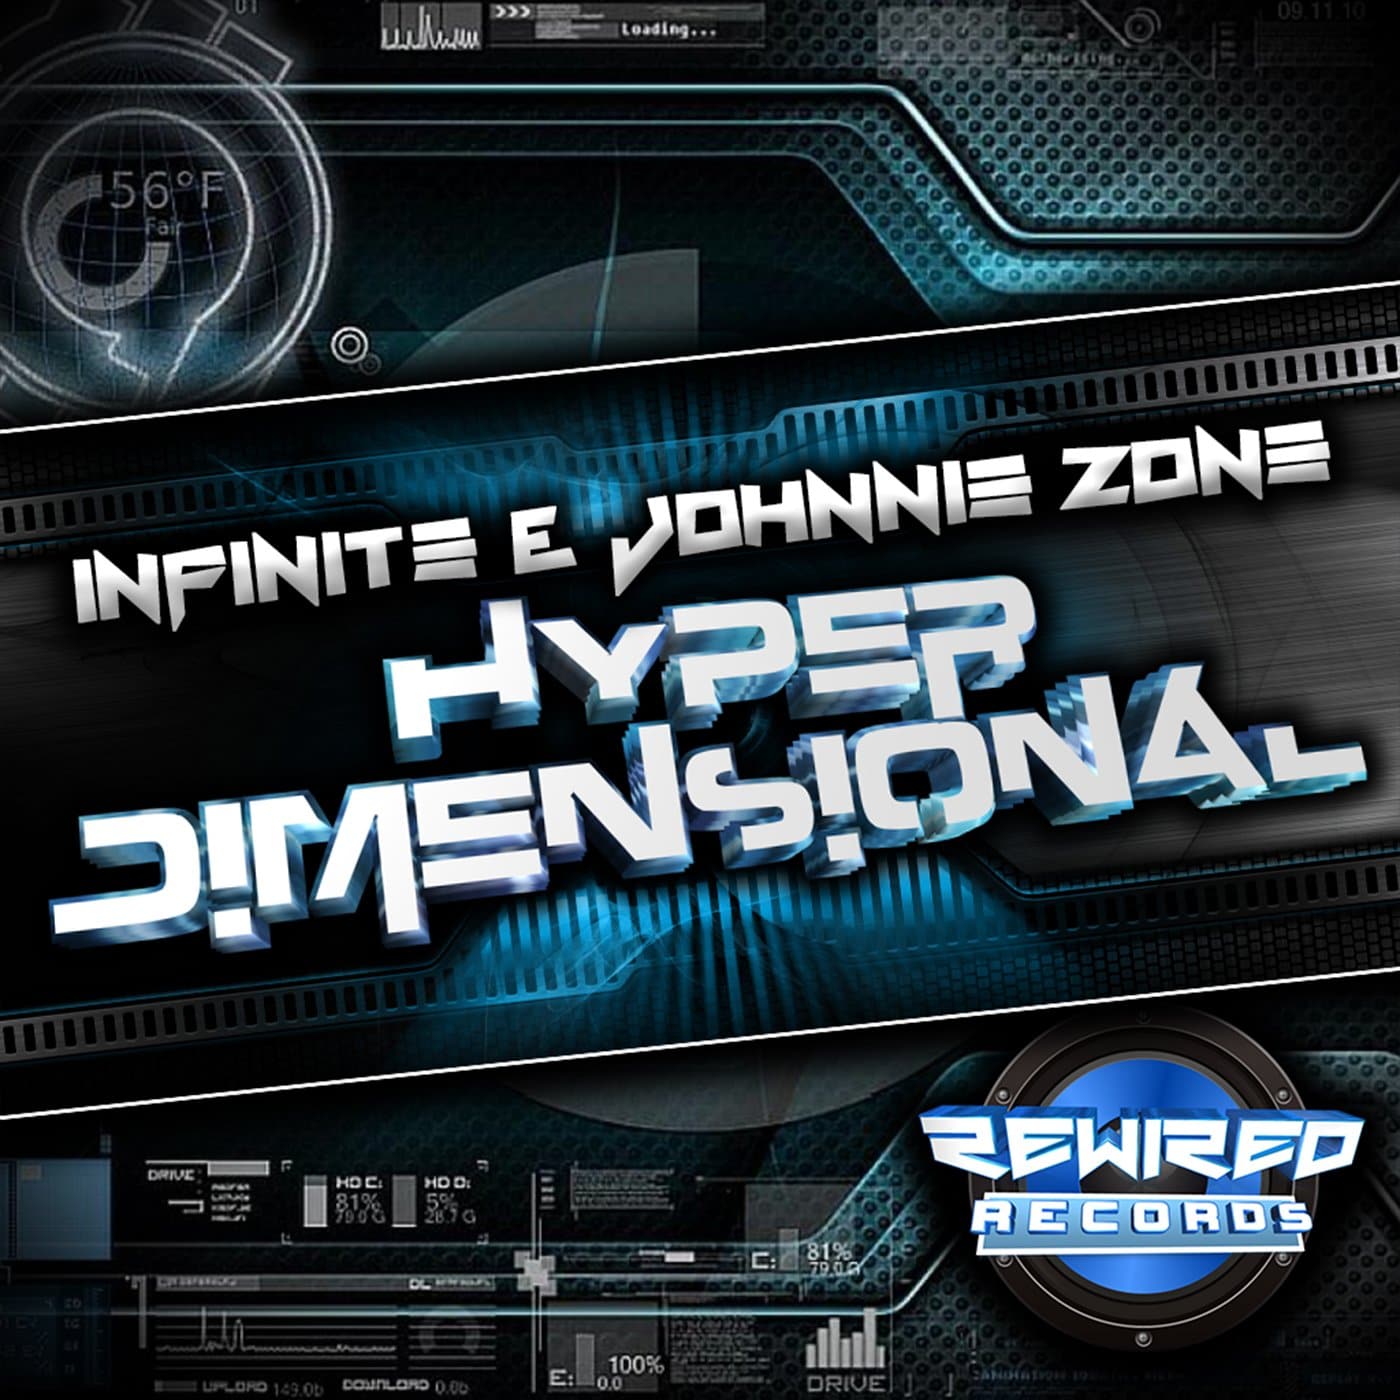 Infinite & Johnnie Zone - Hyper Dimensional - Rewired Records